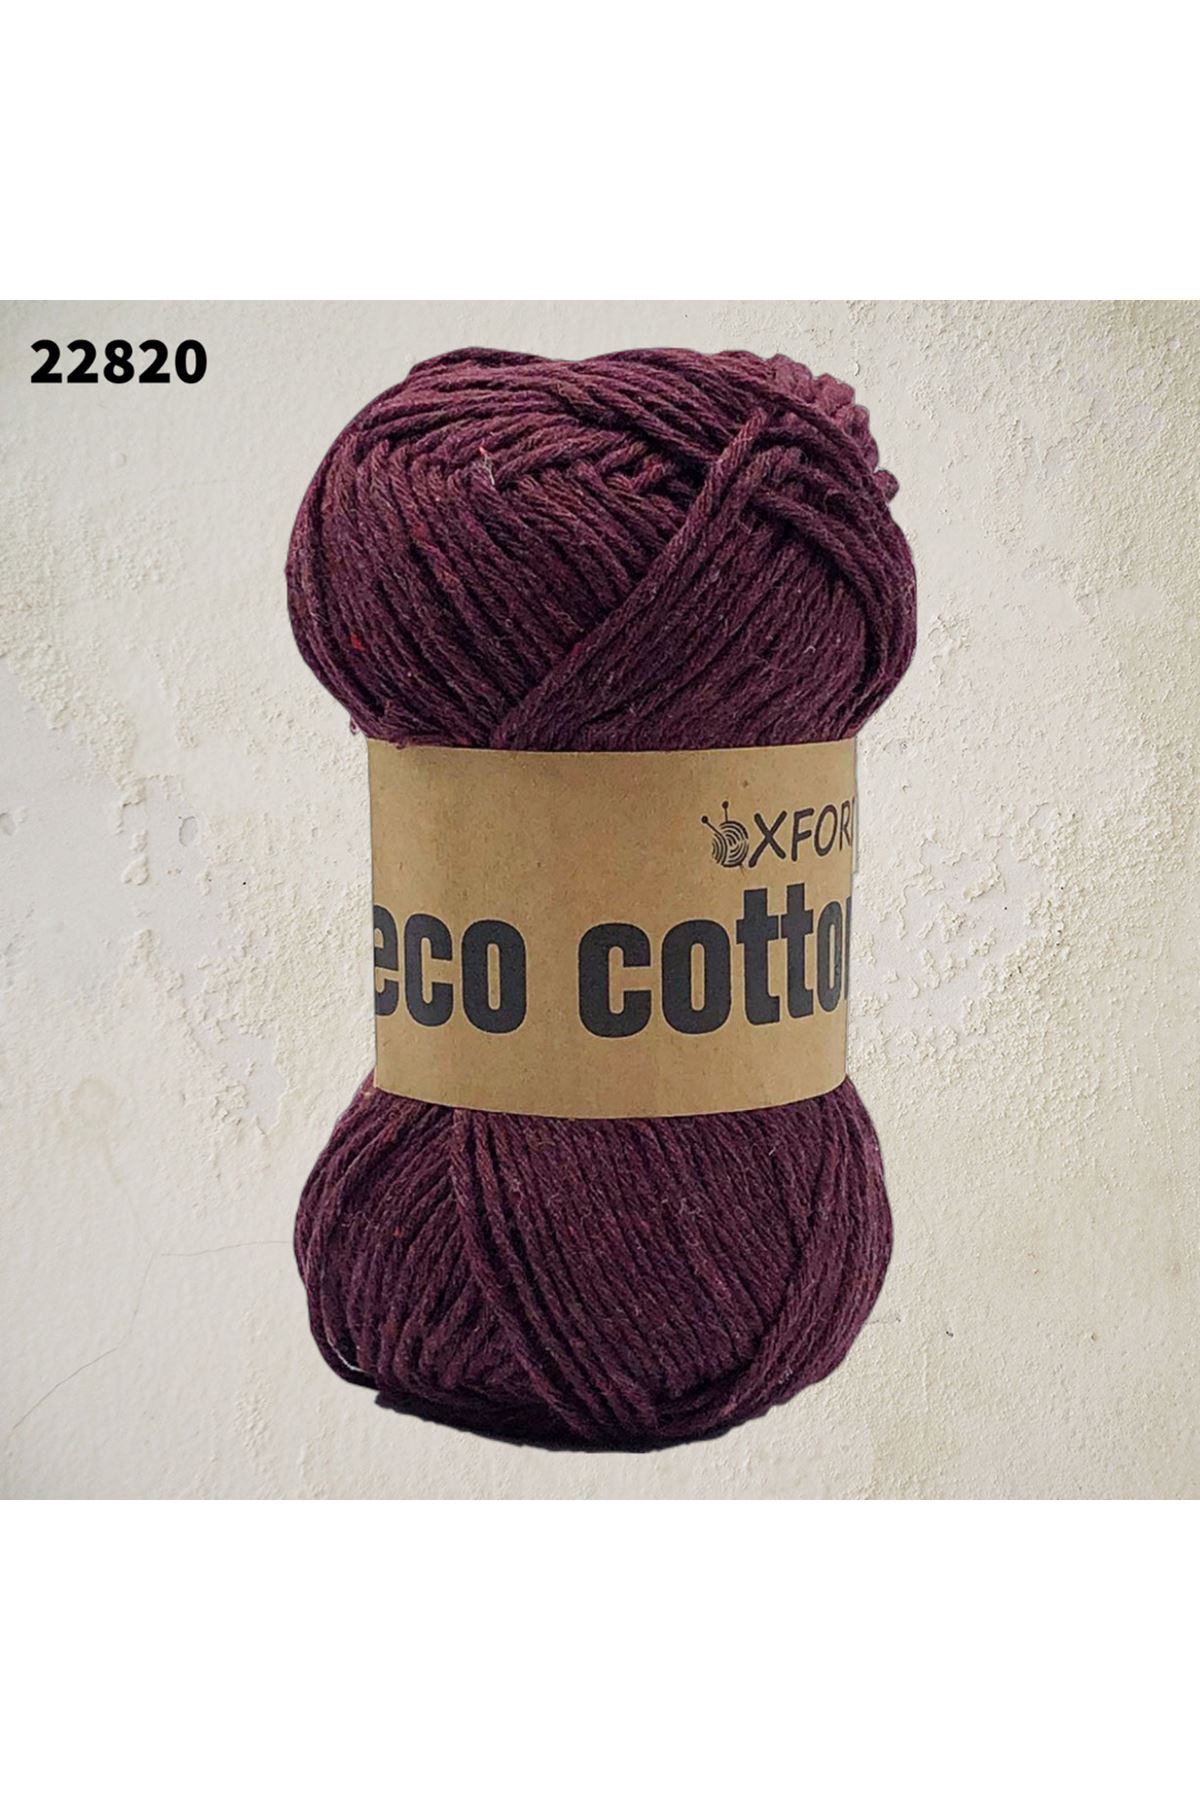 Eco Cotton 100 gram - 22820 - Koyu Bordo